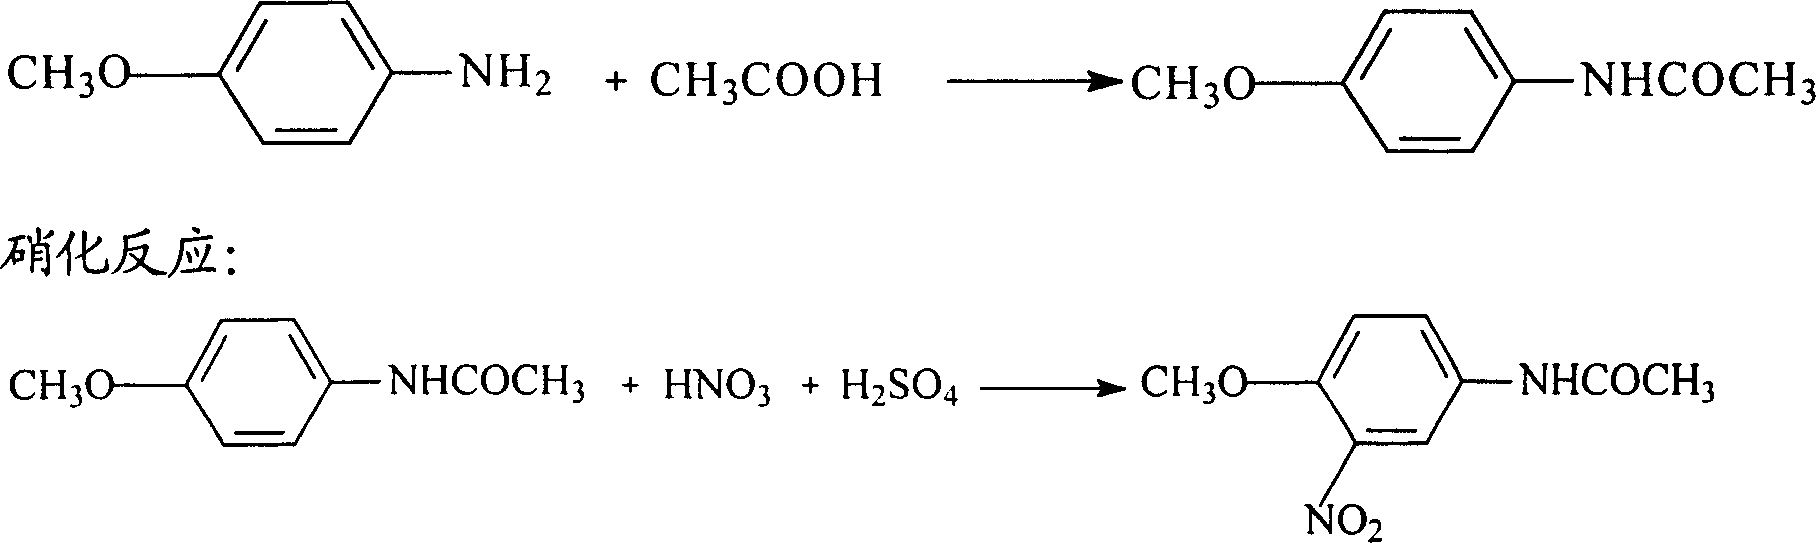 Tech. of preparing 2-amino-4-acetamido methyl-phenoxide